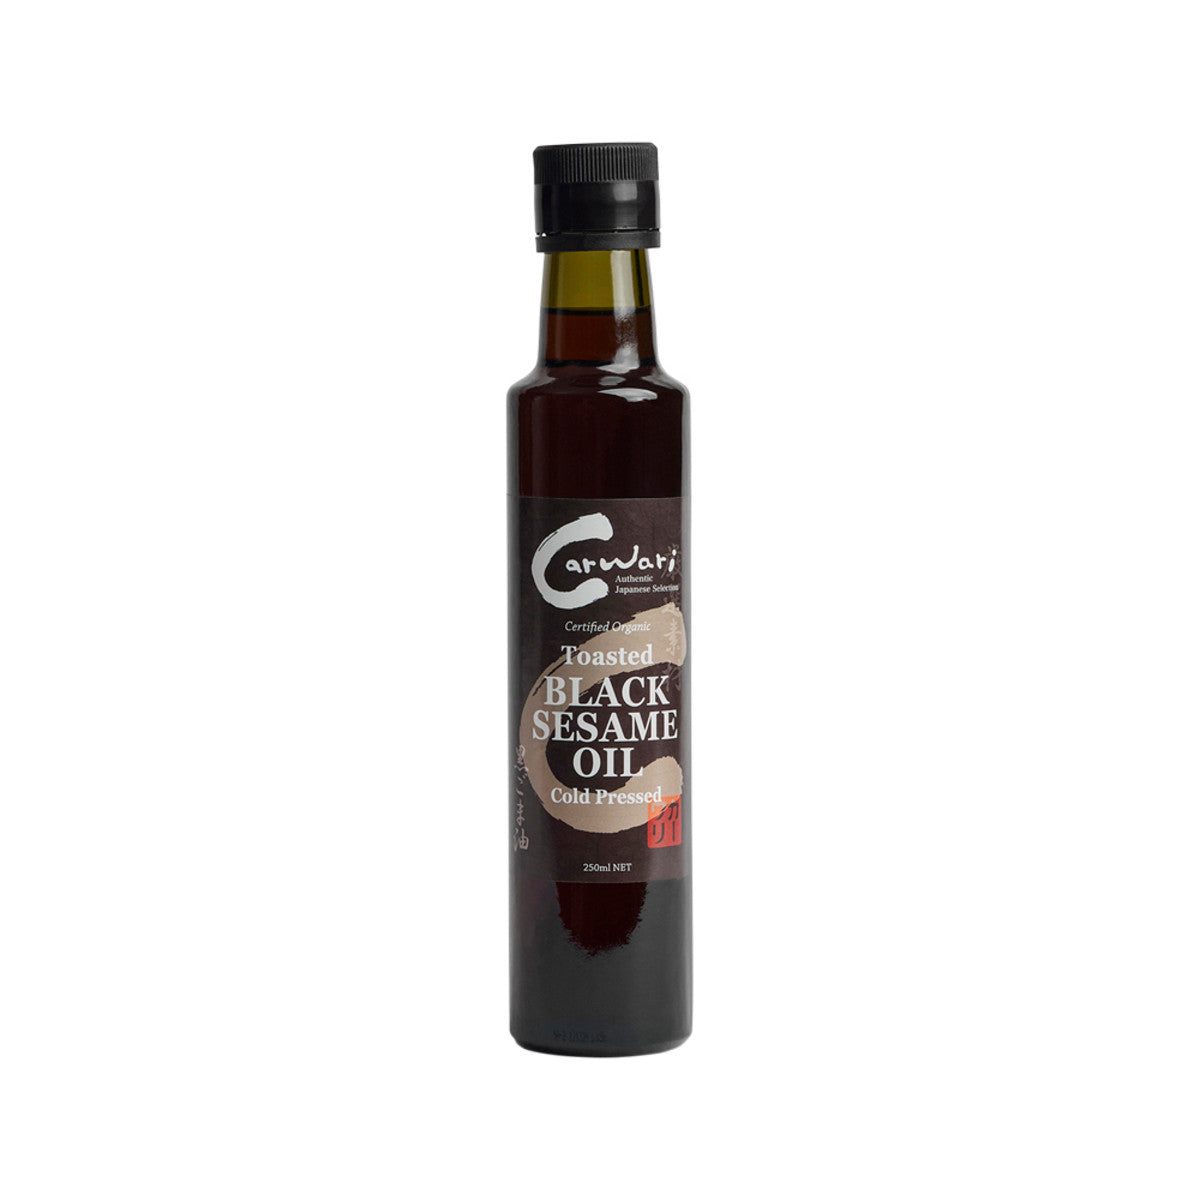 Carwari - Organic Toasted Black Sesame Oil